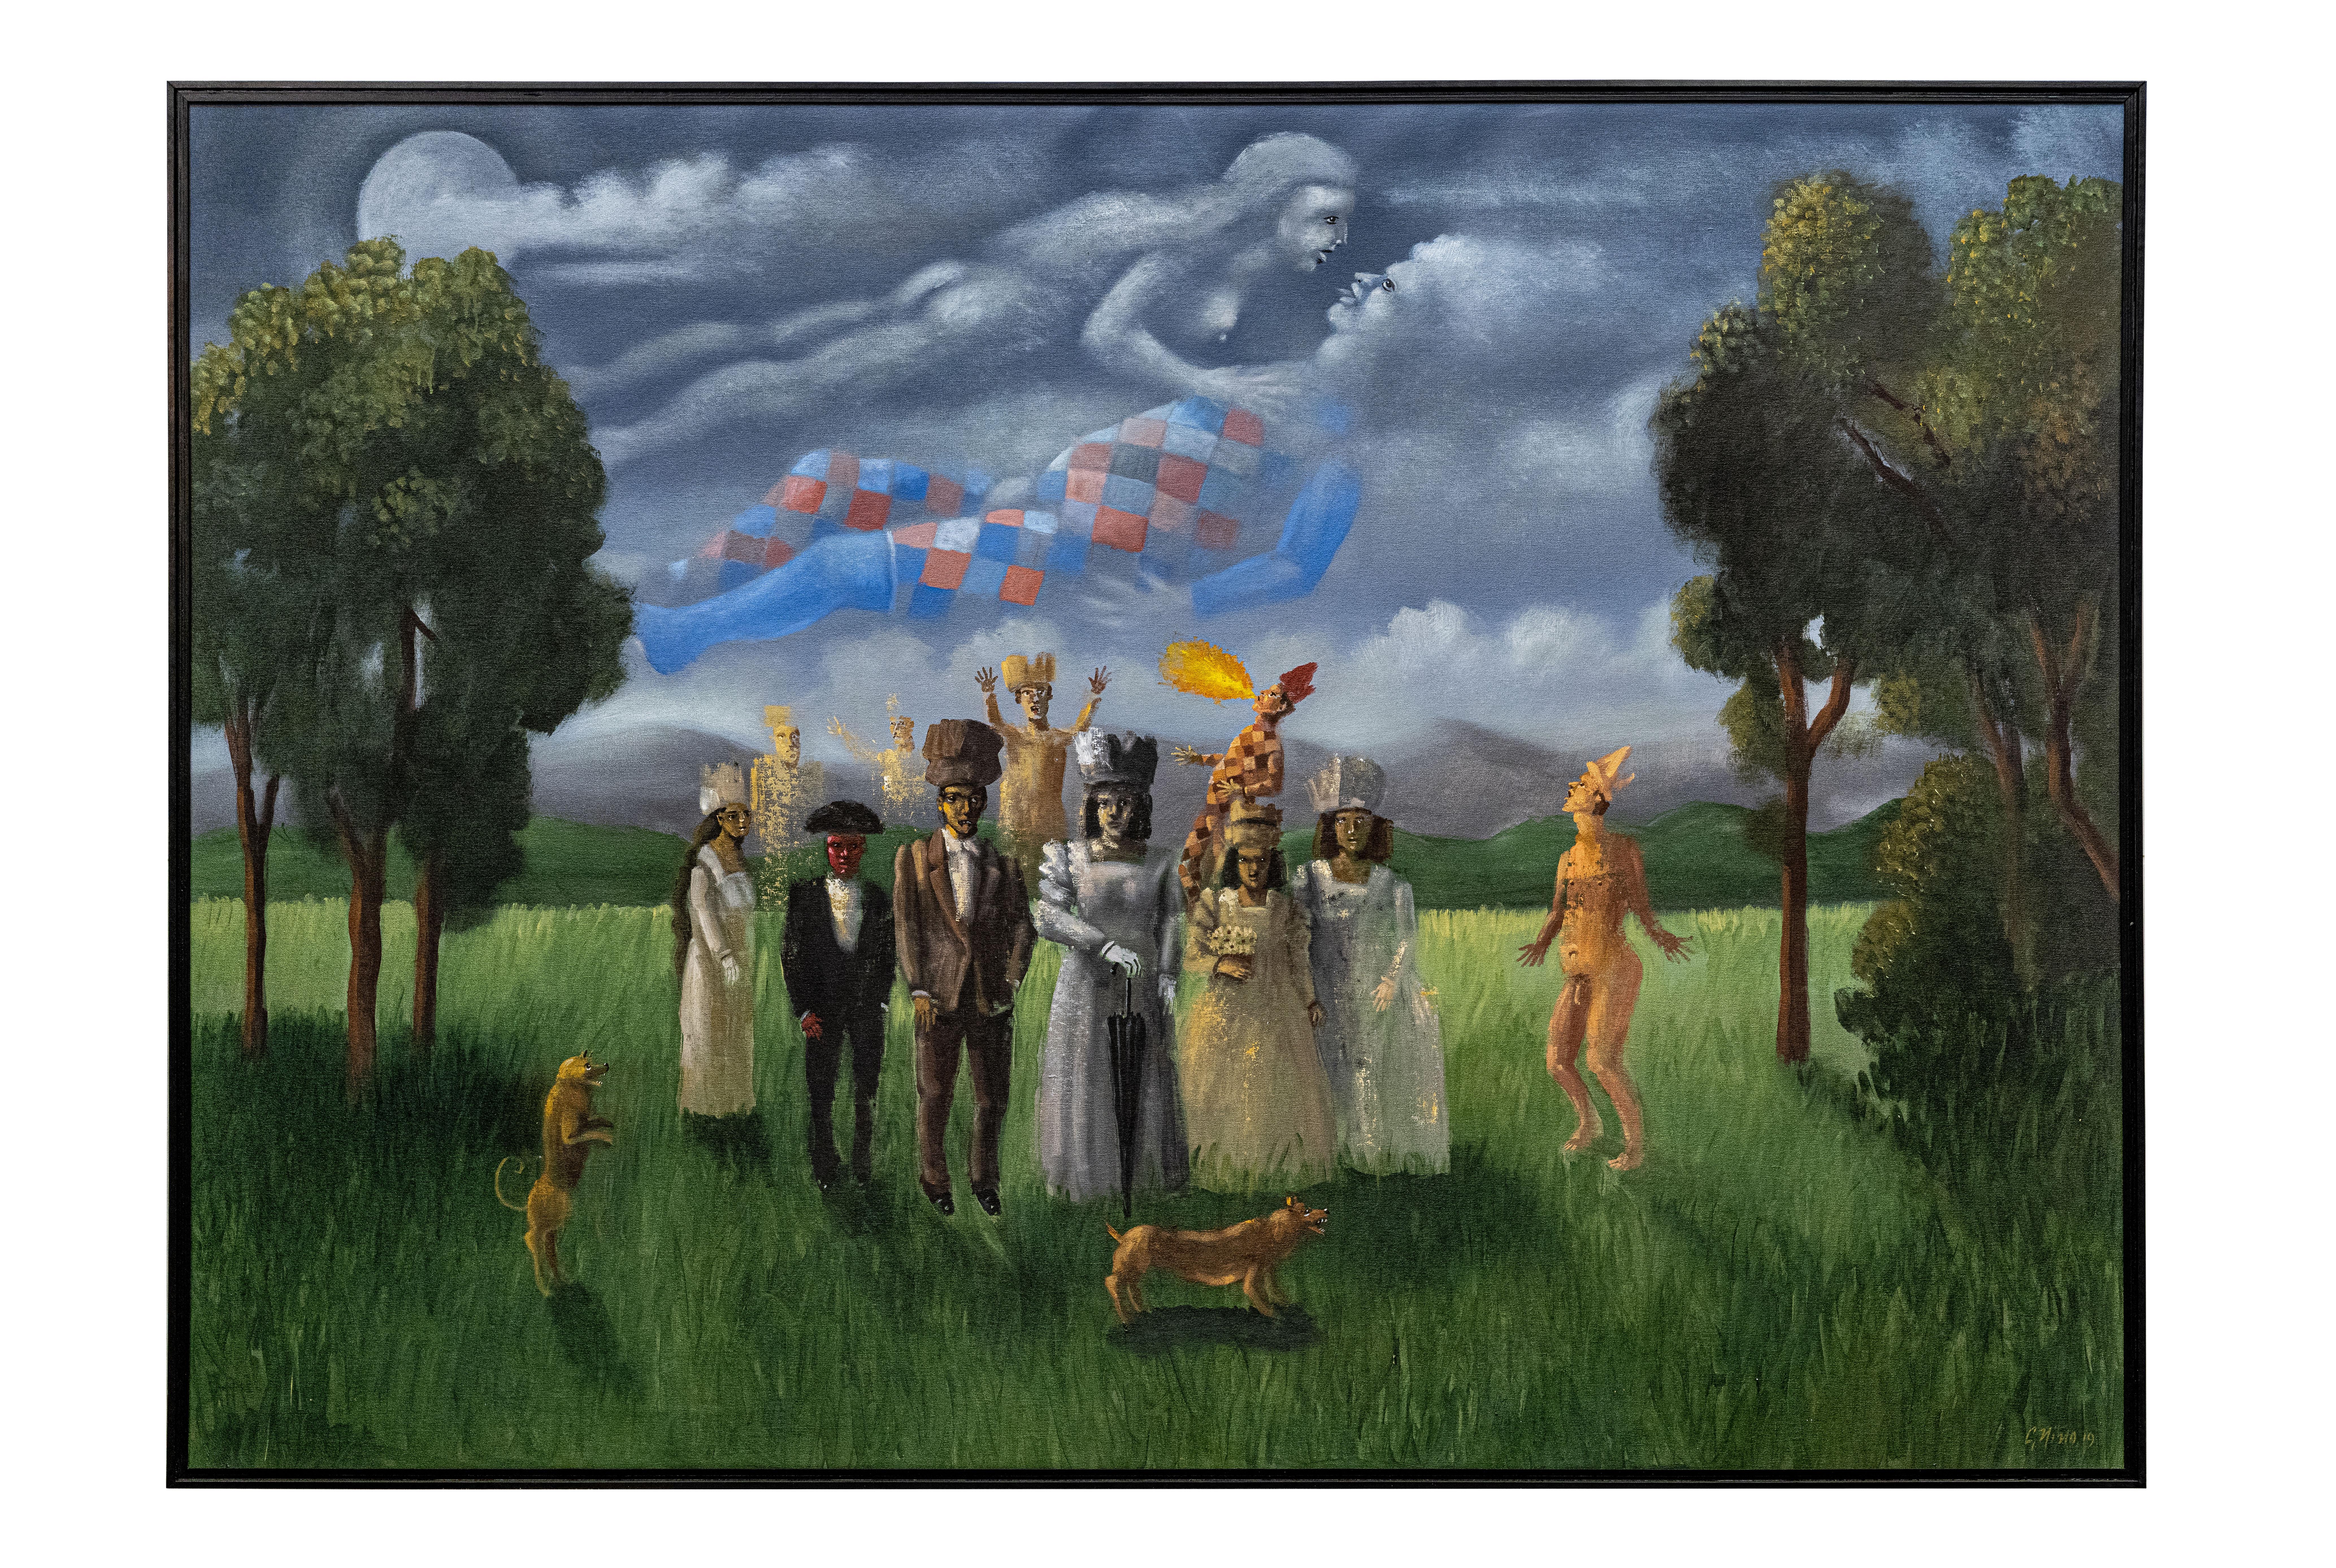 Carmelo Nio, Amantes con escena, 2019, 140 x 200 cm, 55.1 x 78,7 Zoll. – Painting von Carmelo Niño